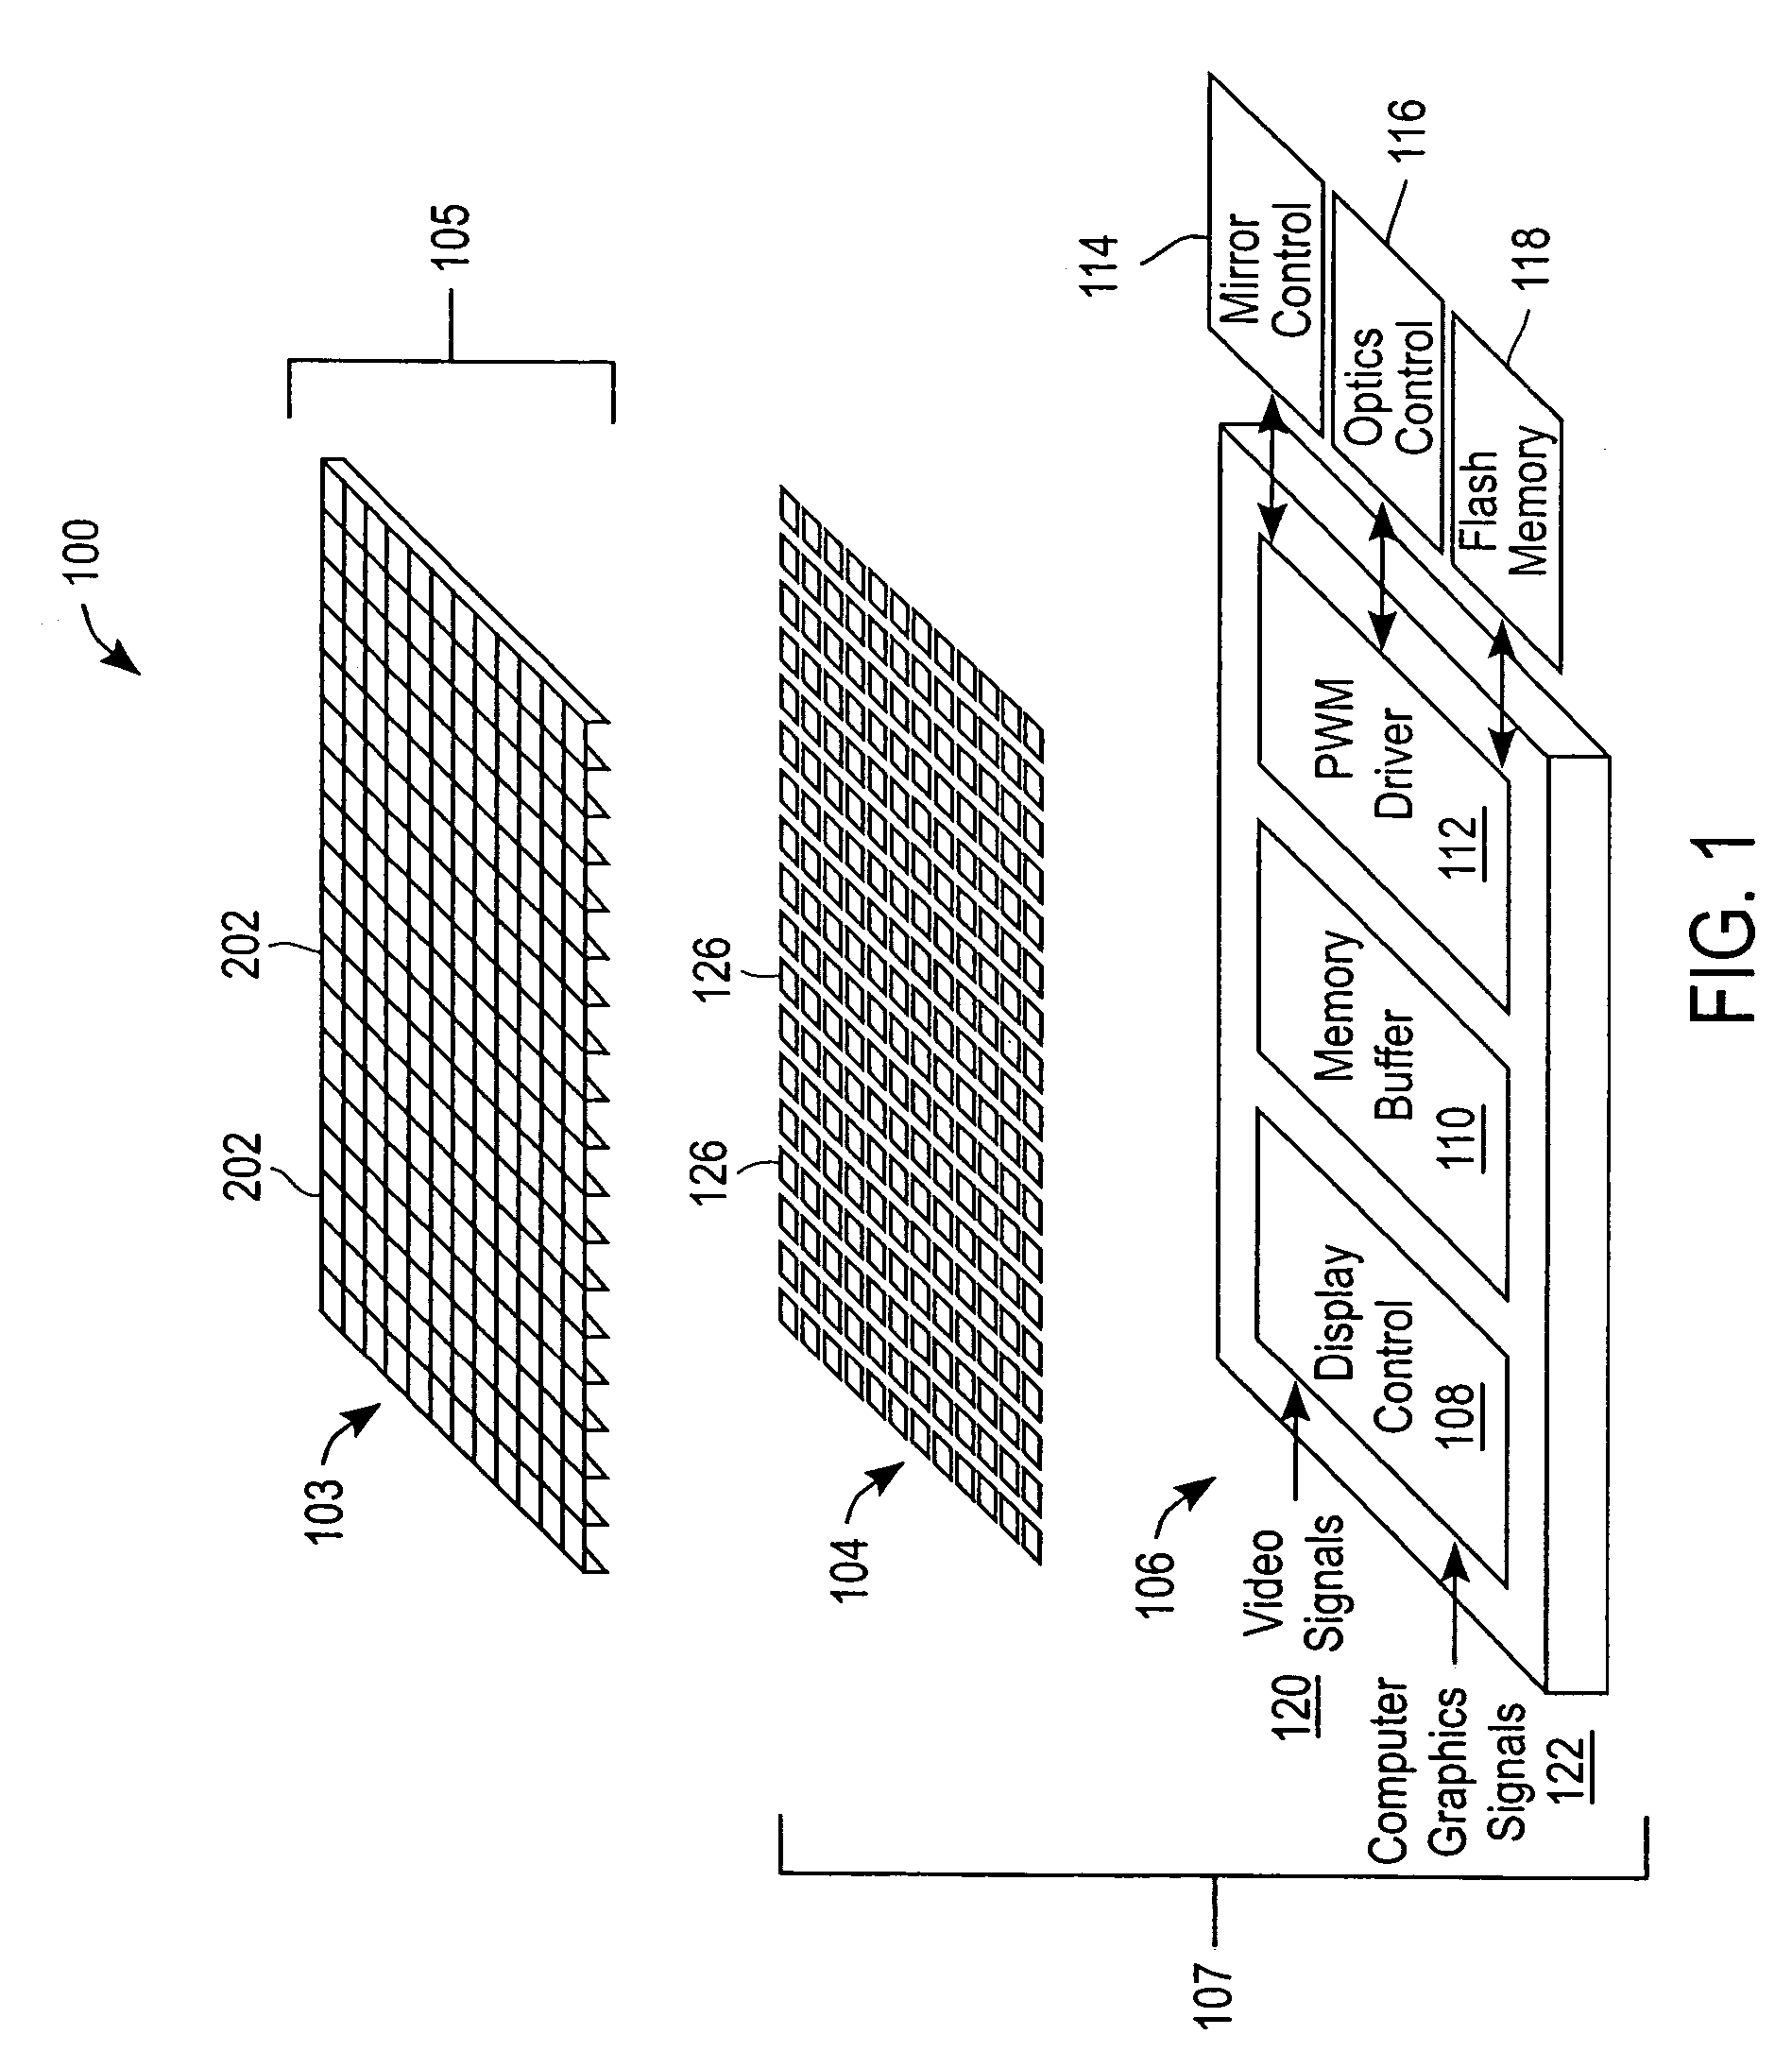 Fabrication of a high fill ratio reflective spatial light modulator with hidden hinge